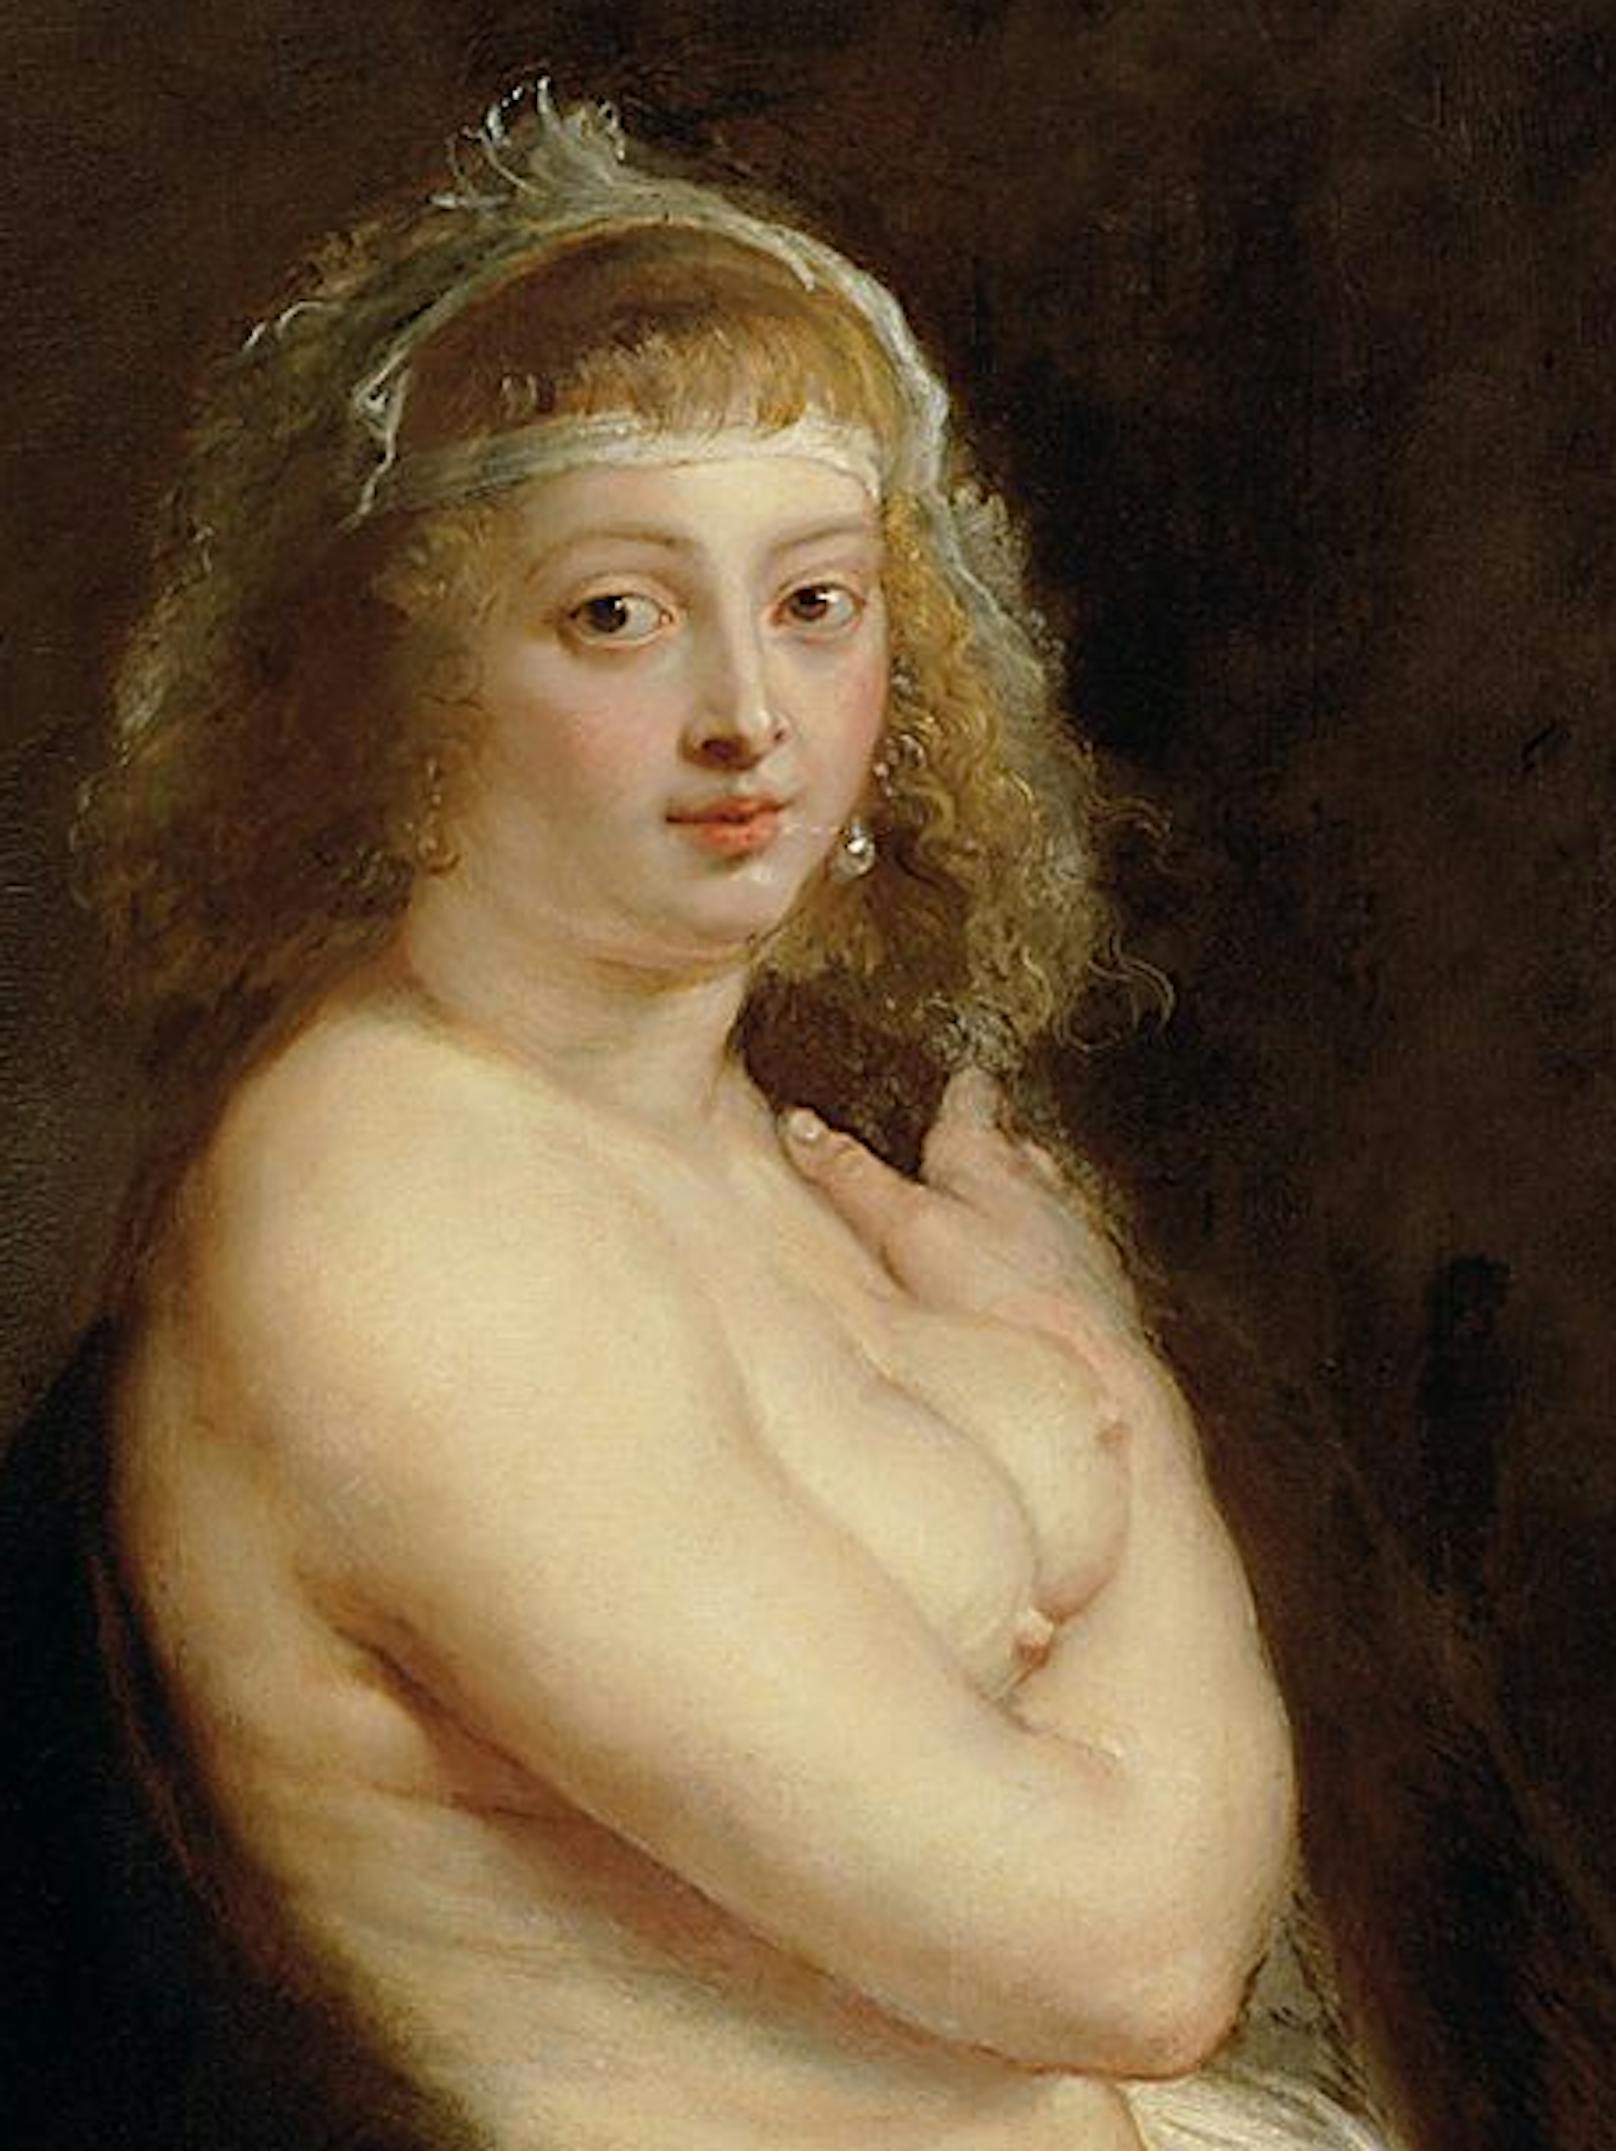 Peter Paul Rubens: "Helena Fourment"